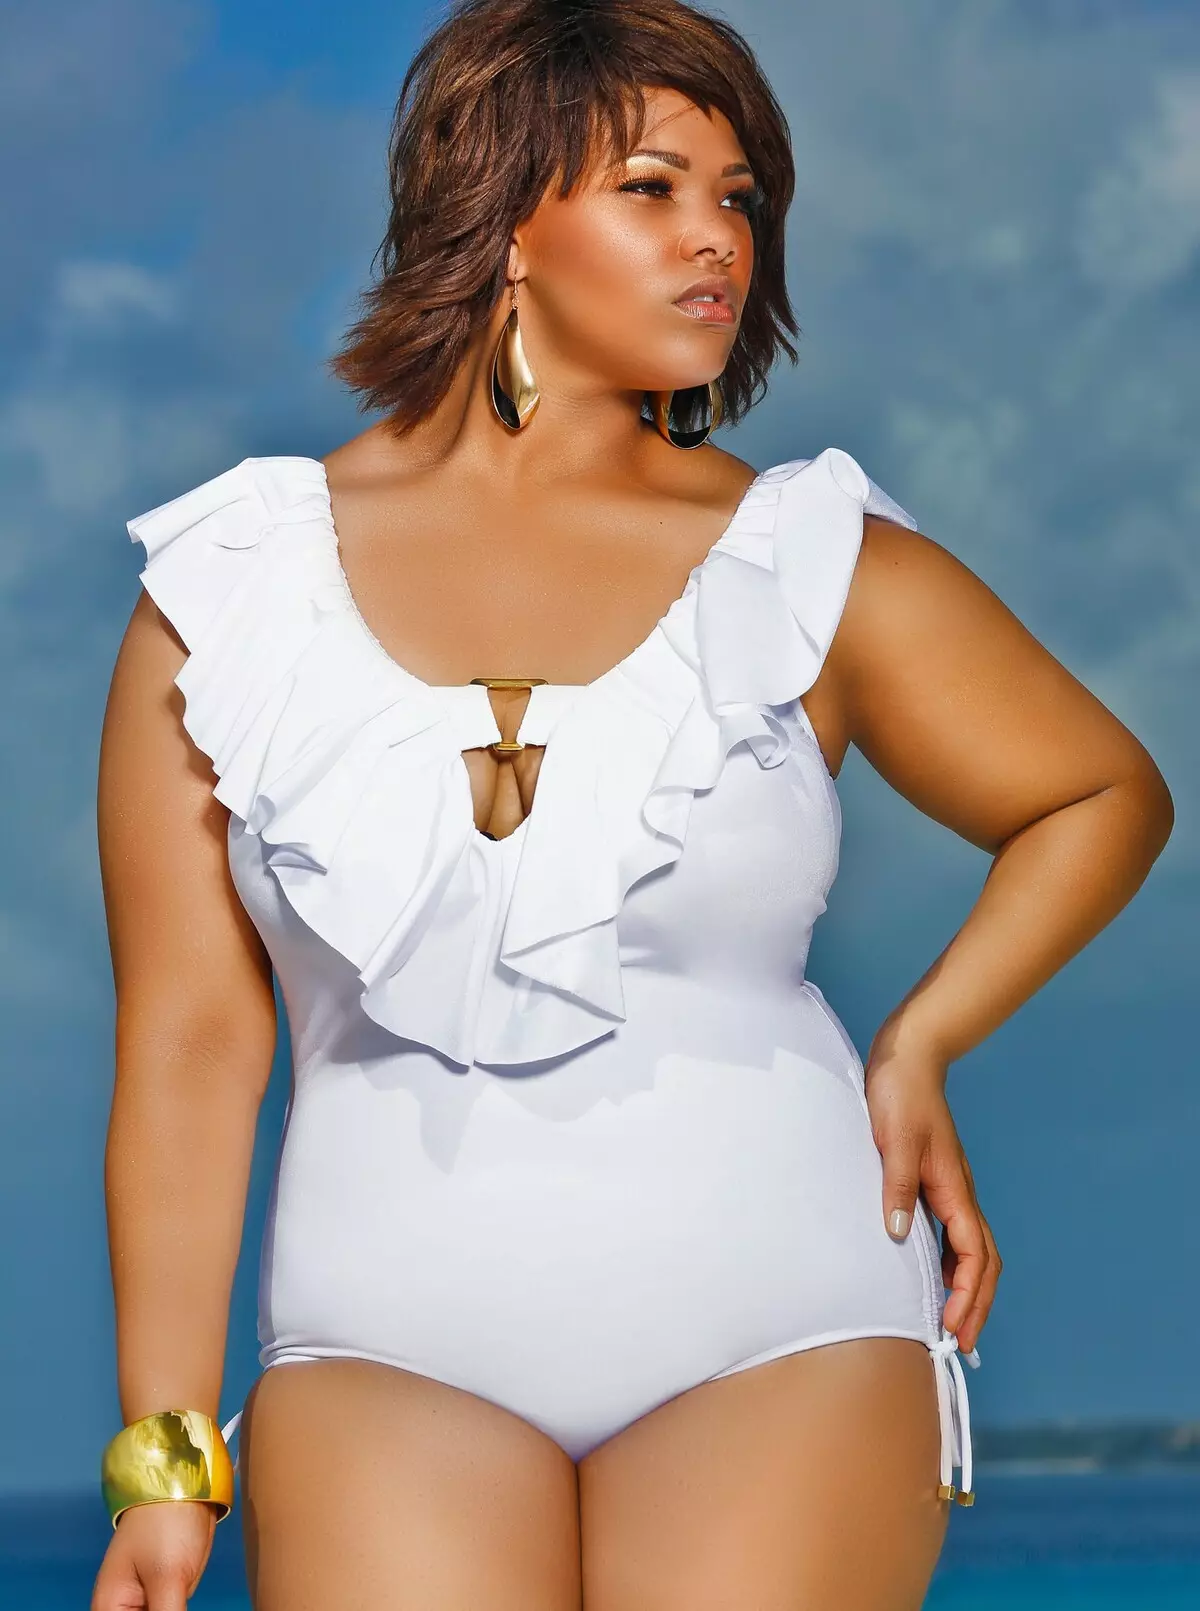 Bijele Swimsuit (73 fotografije): Prekrasan ženski modeli, JAR-beli balon kupaći kostim, polka dot modeli 1557_15